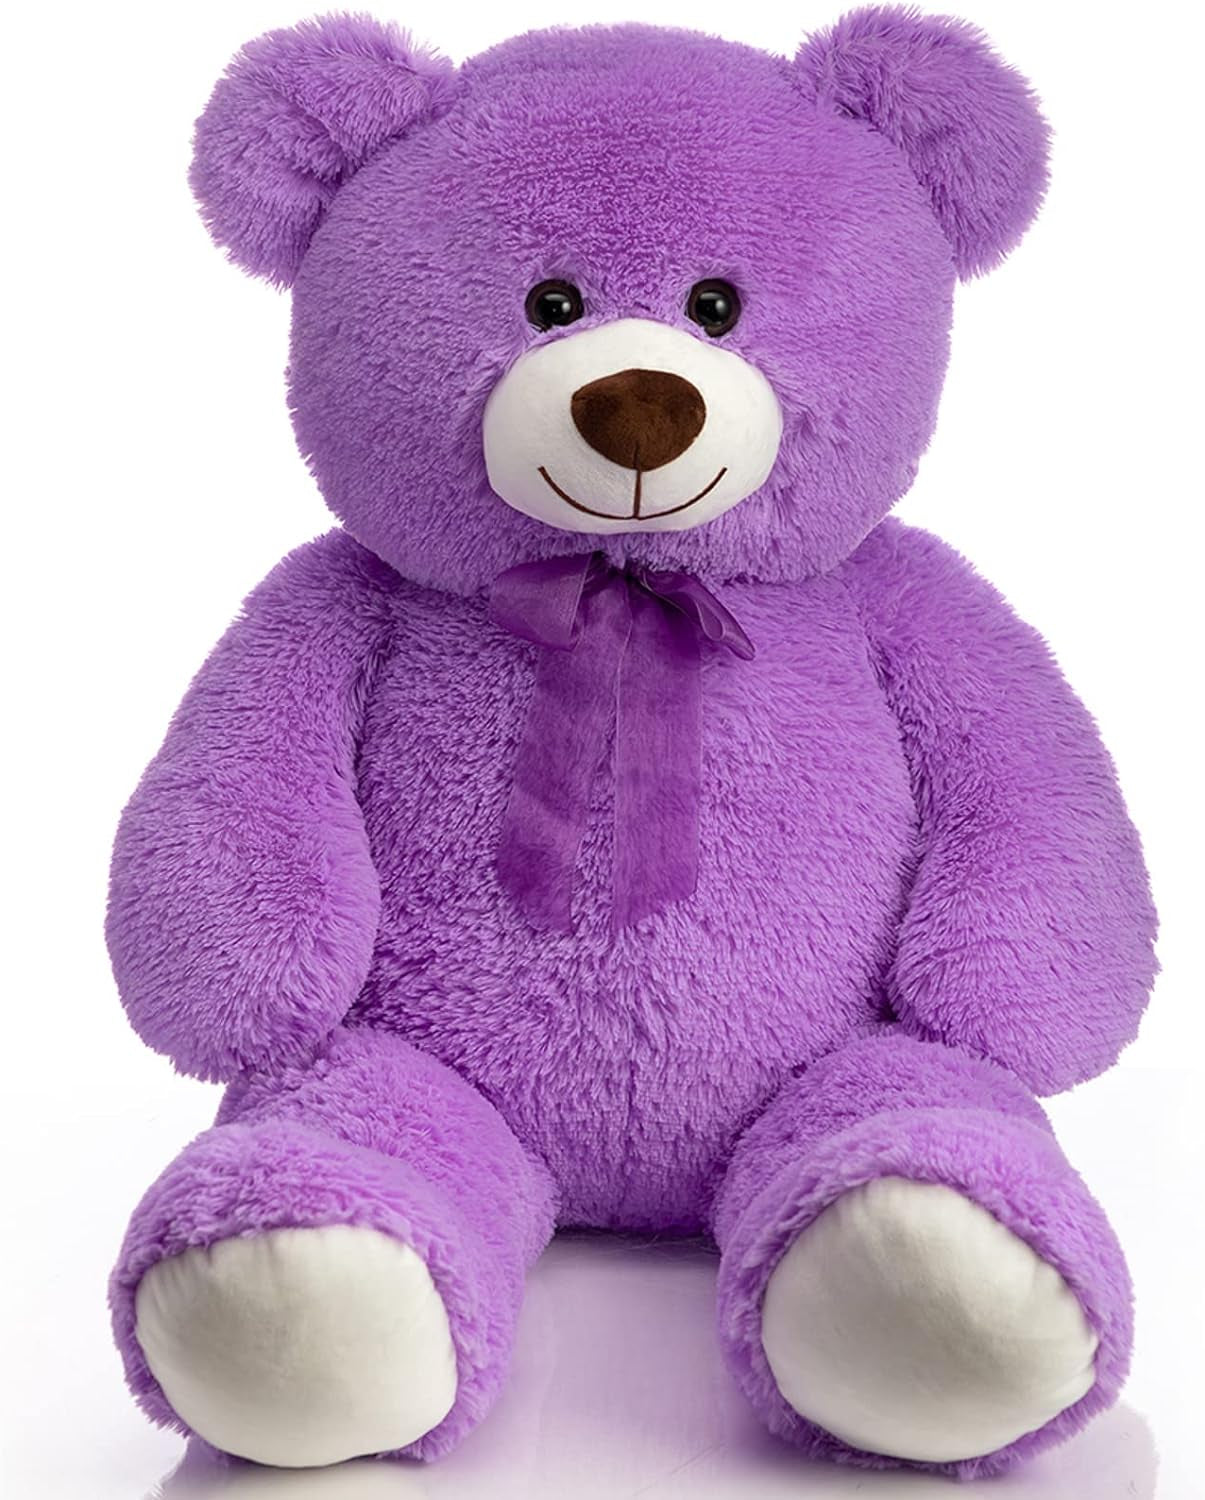 90Cm Giant Teddy Bear Stuffed Animal Soft Toy Large Love Gift Child Dolls Plush 36Inch Teddy Bears, Light Blue